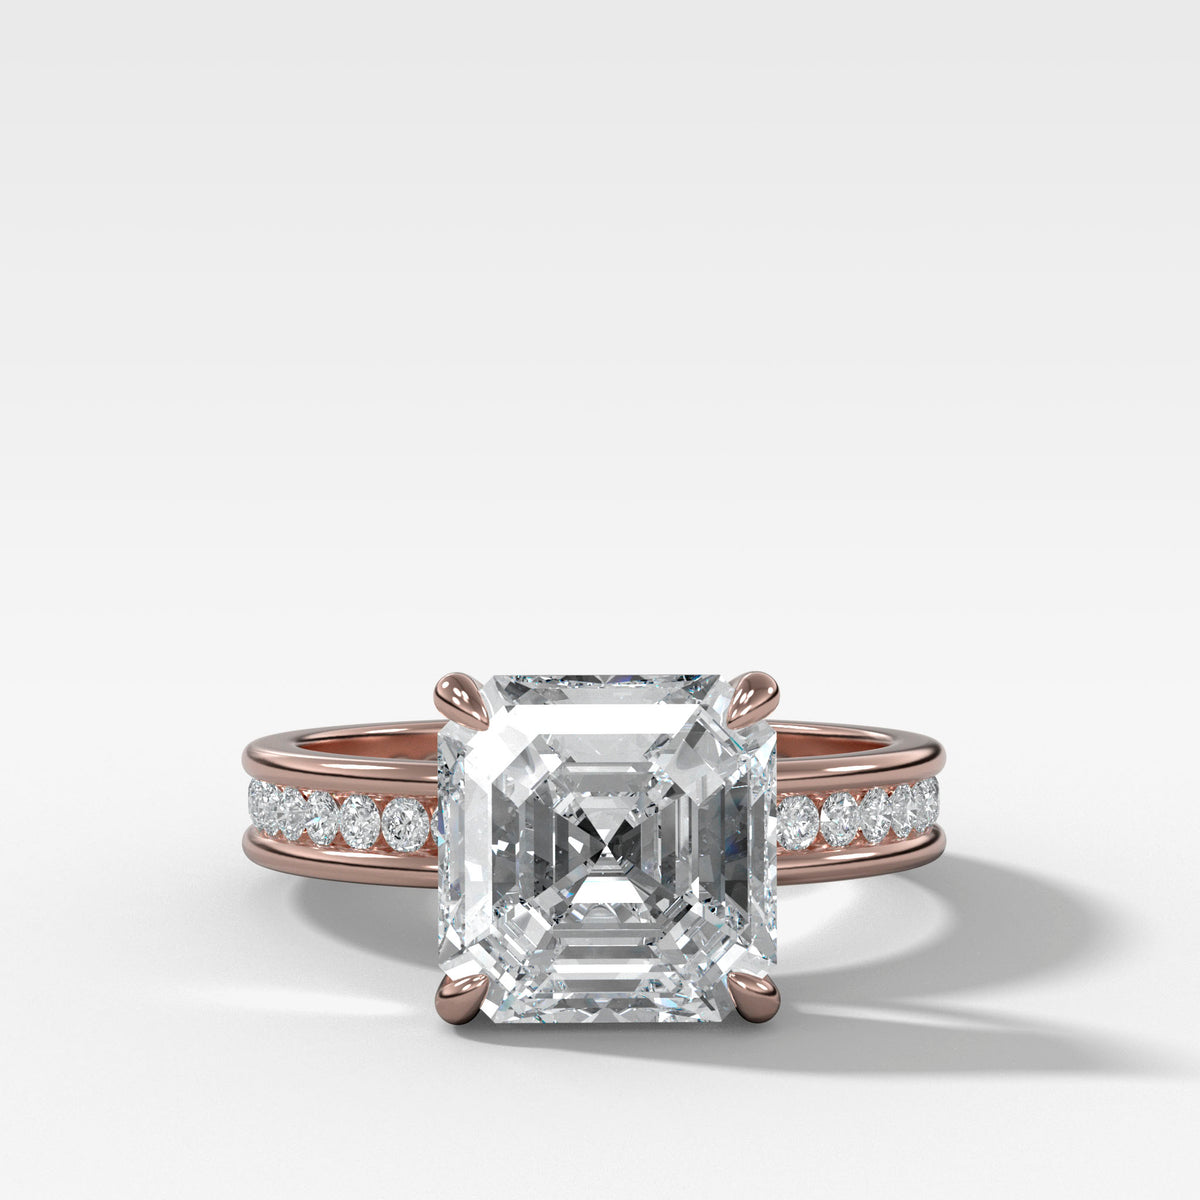 Petite Channel Set Engagement Ring with Asscher Cut Diamond